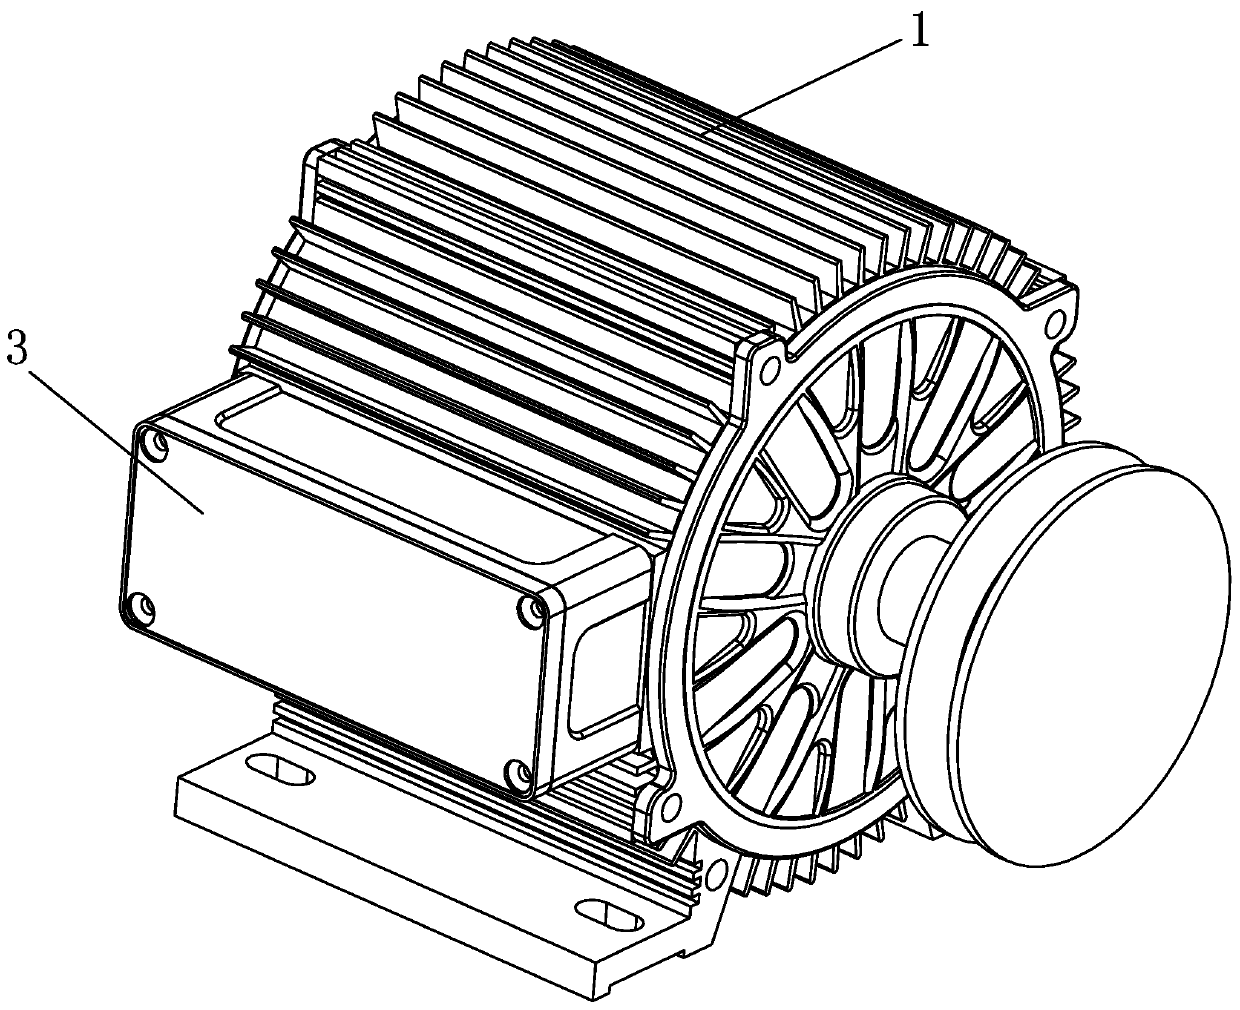 Three-phase synchronous motor